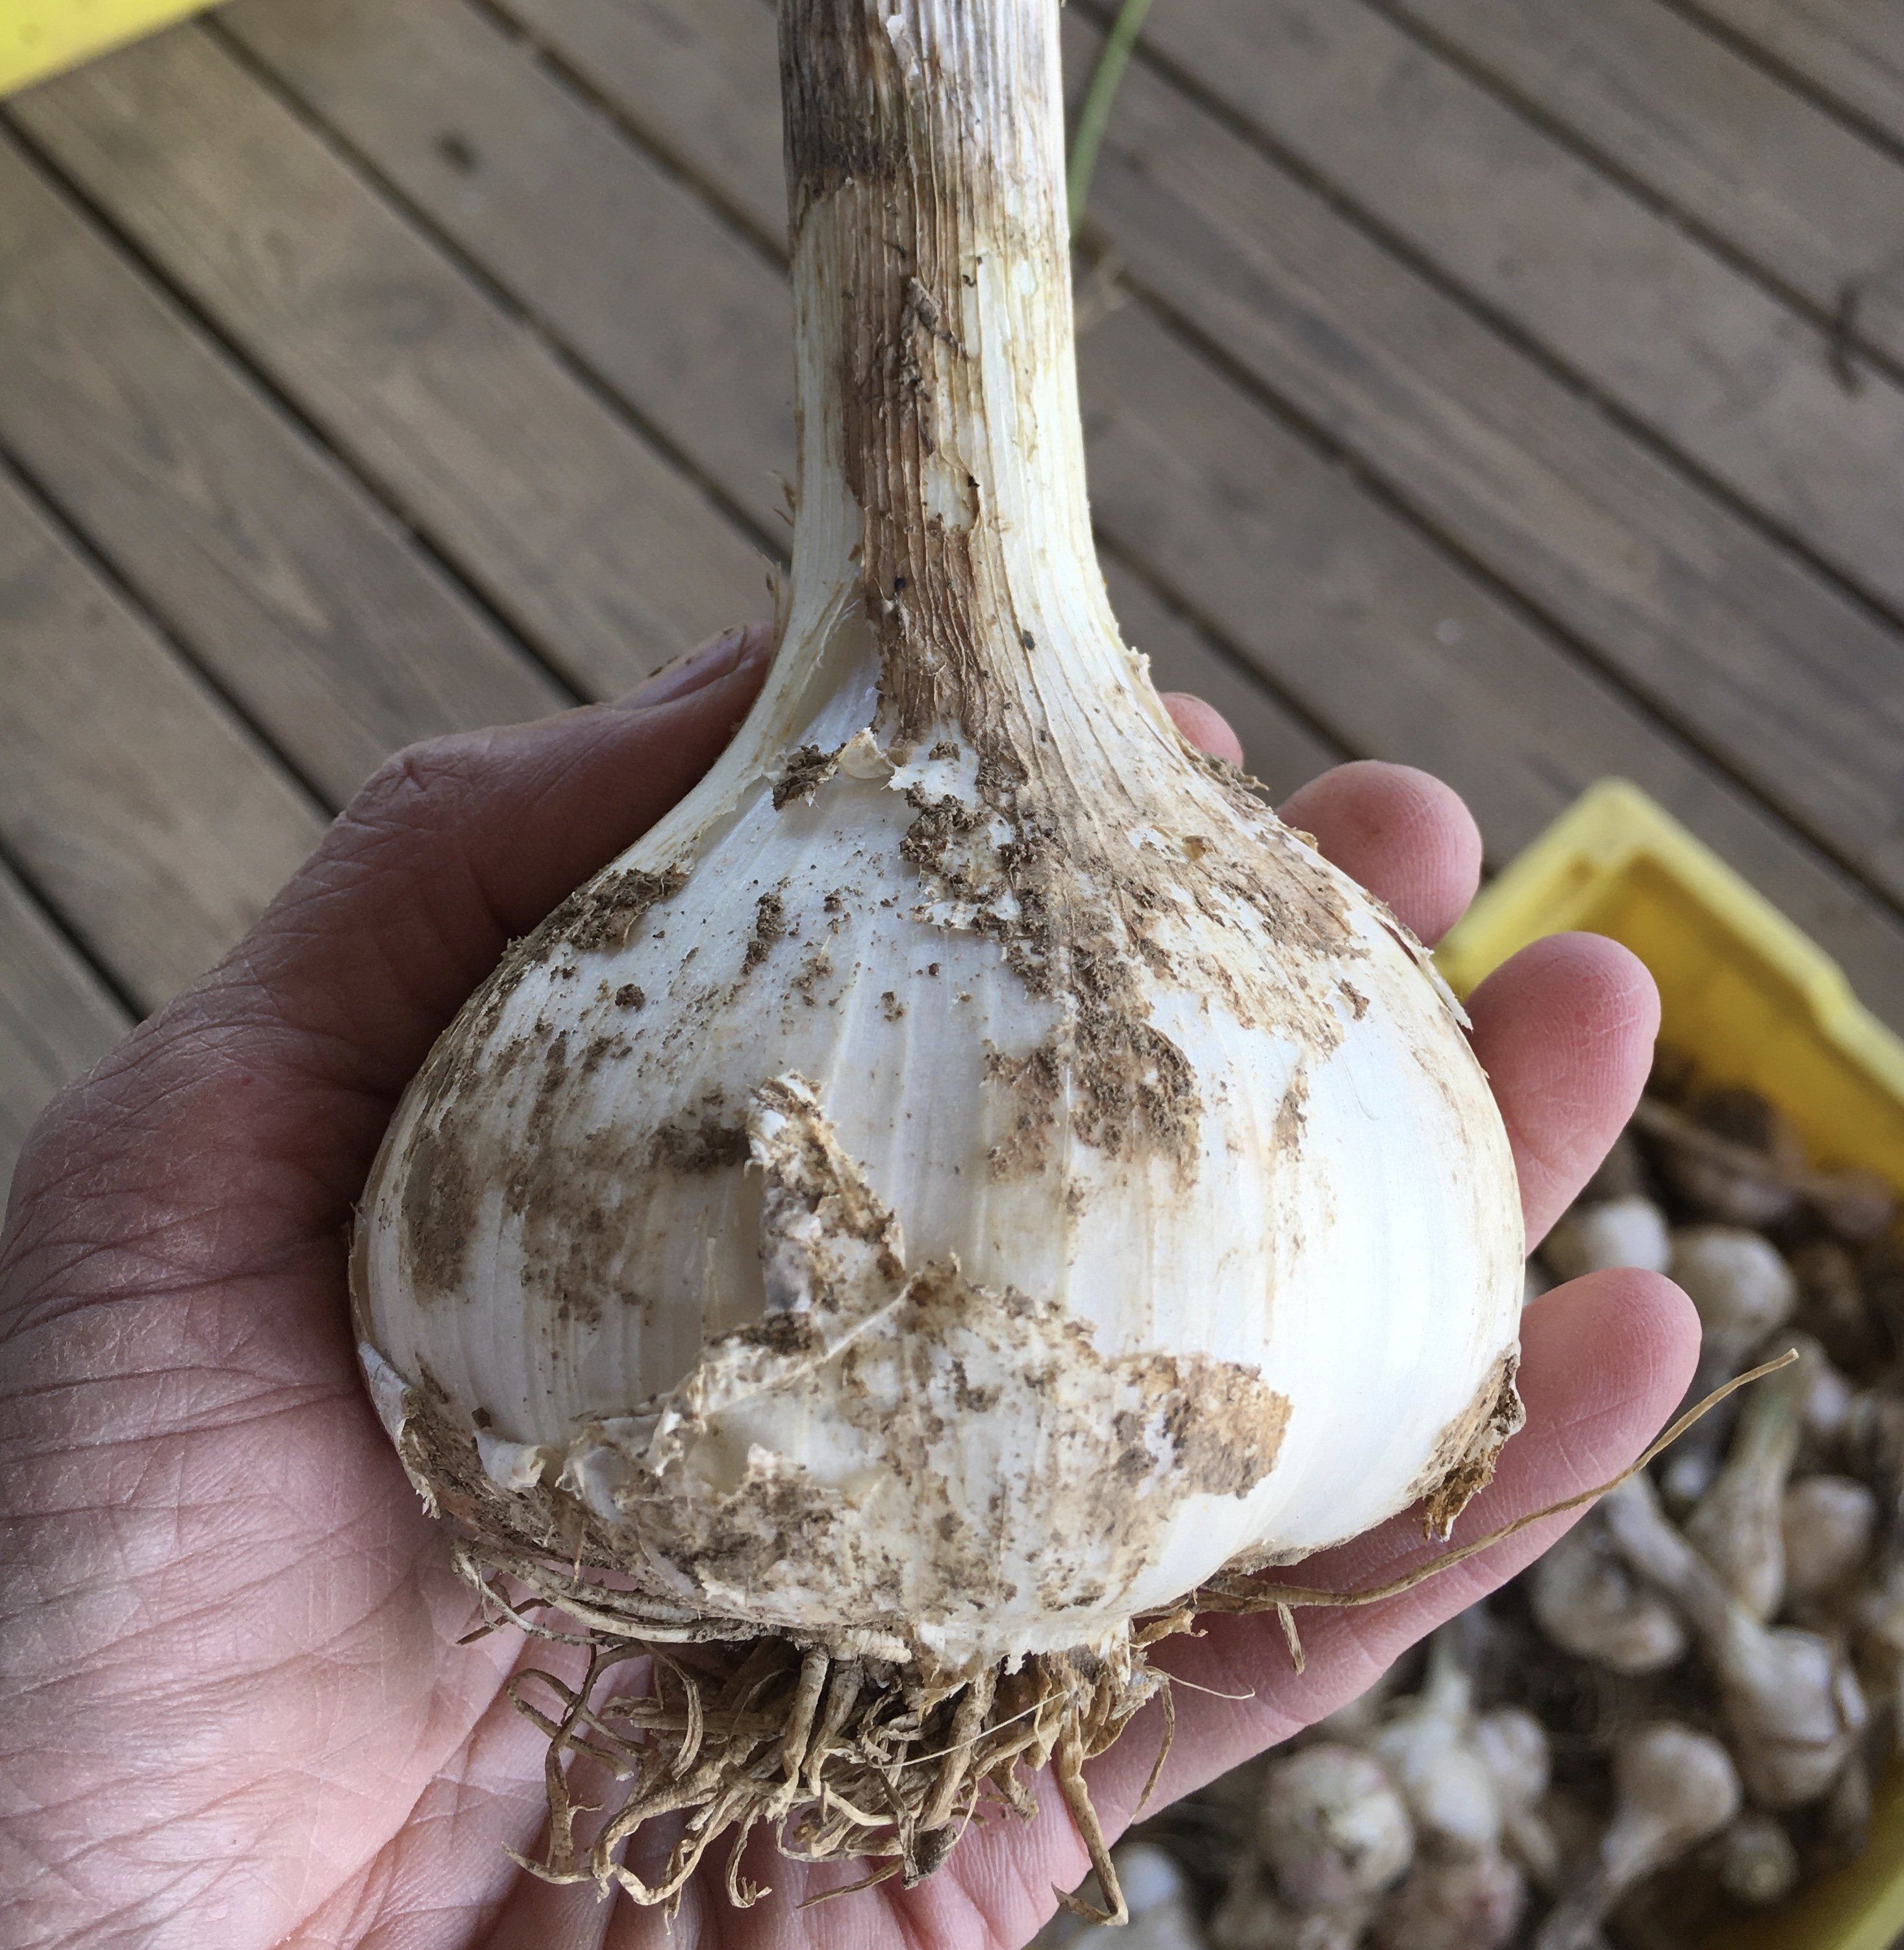 Previous Happening: Health-Giving Garlic! (July 5, 2020)